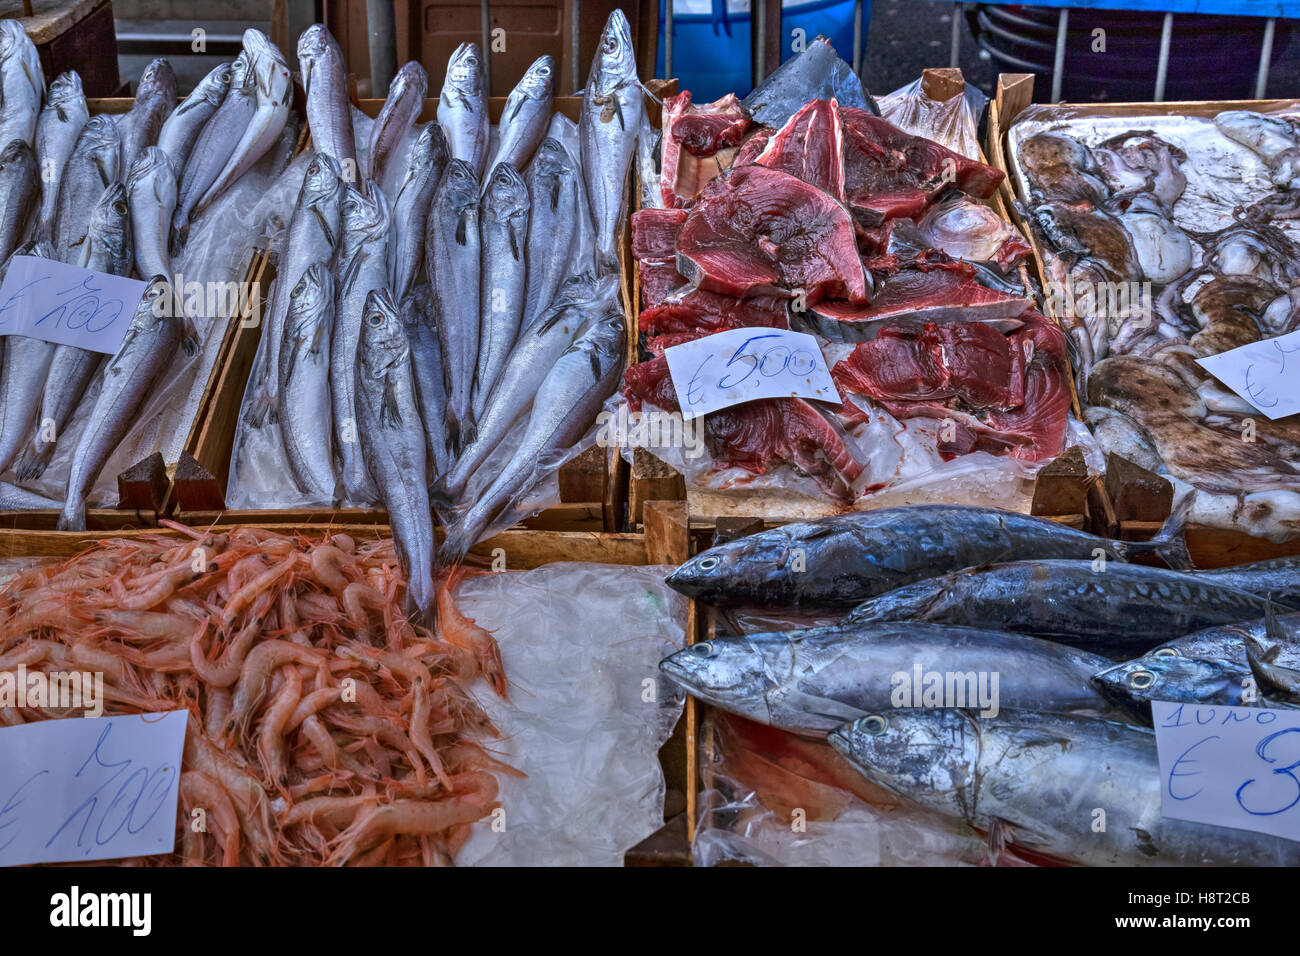 La Pescheria, mercado de pescado, Catania, Sicilia, Italia Foto de stock